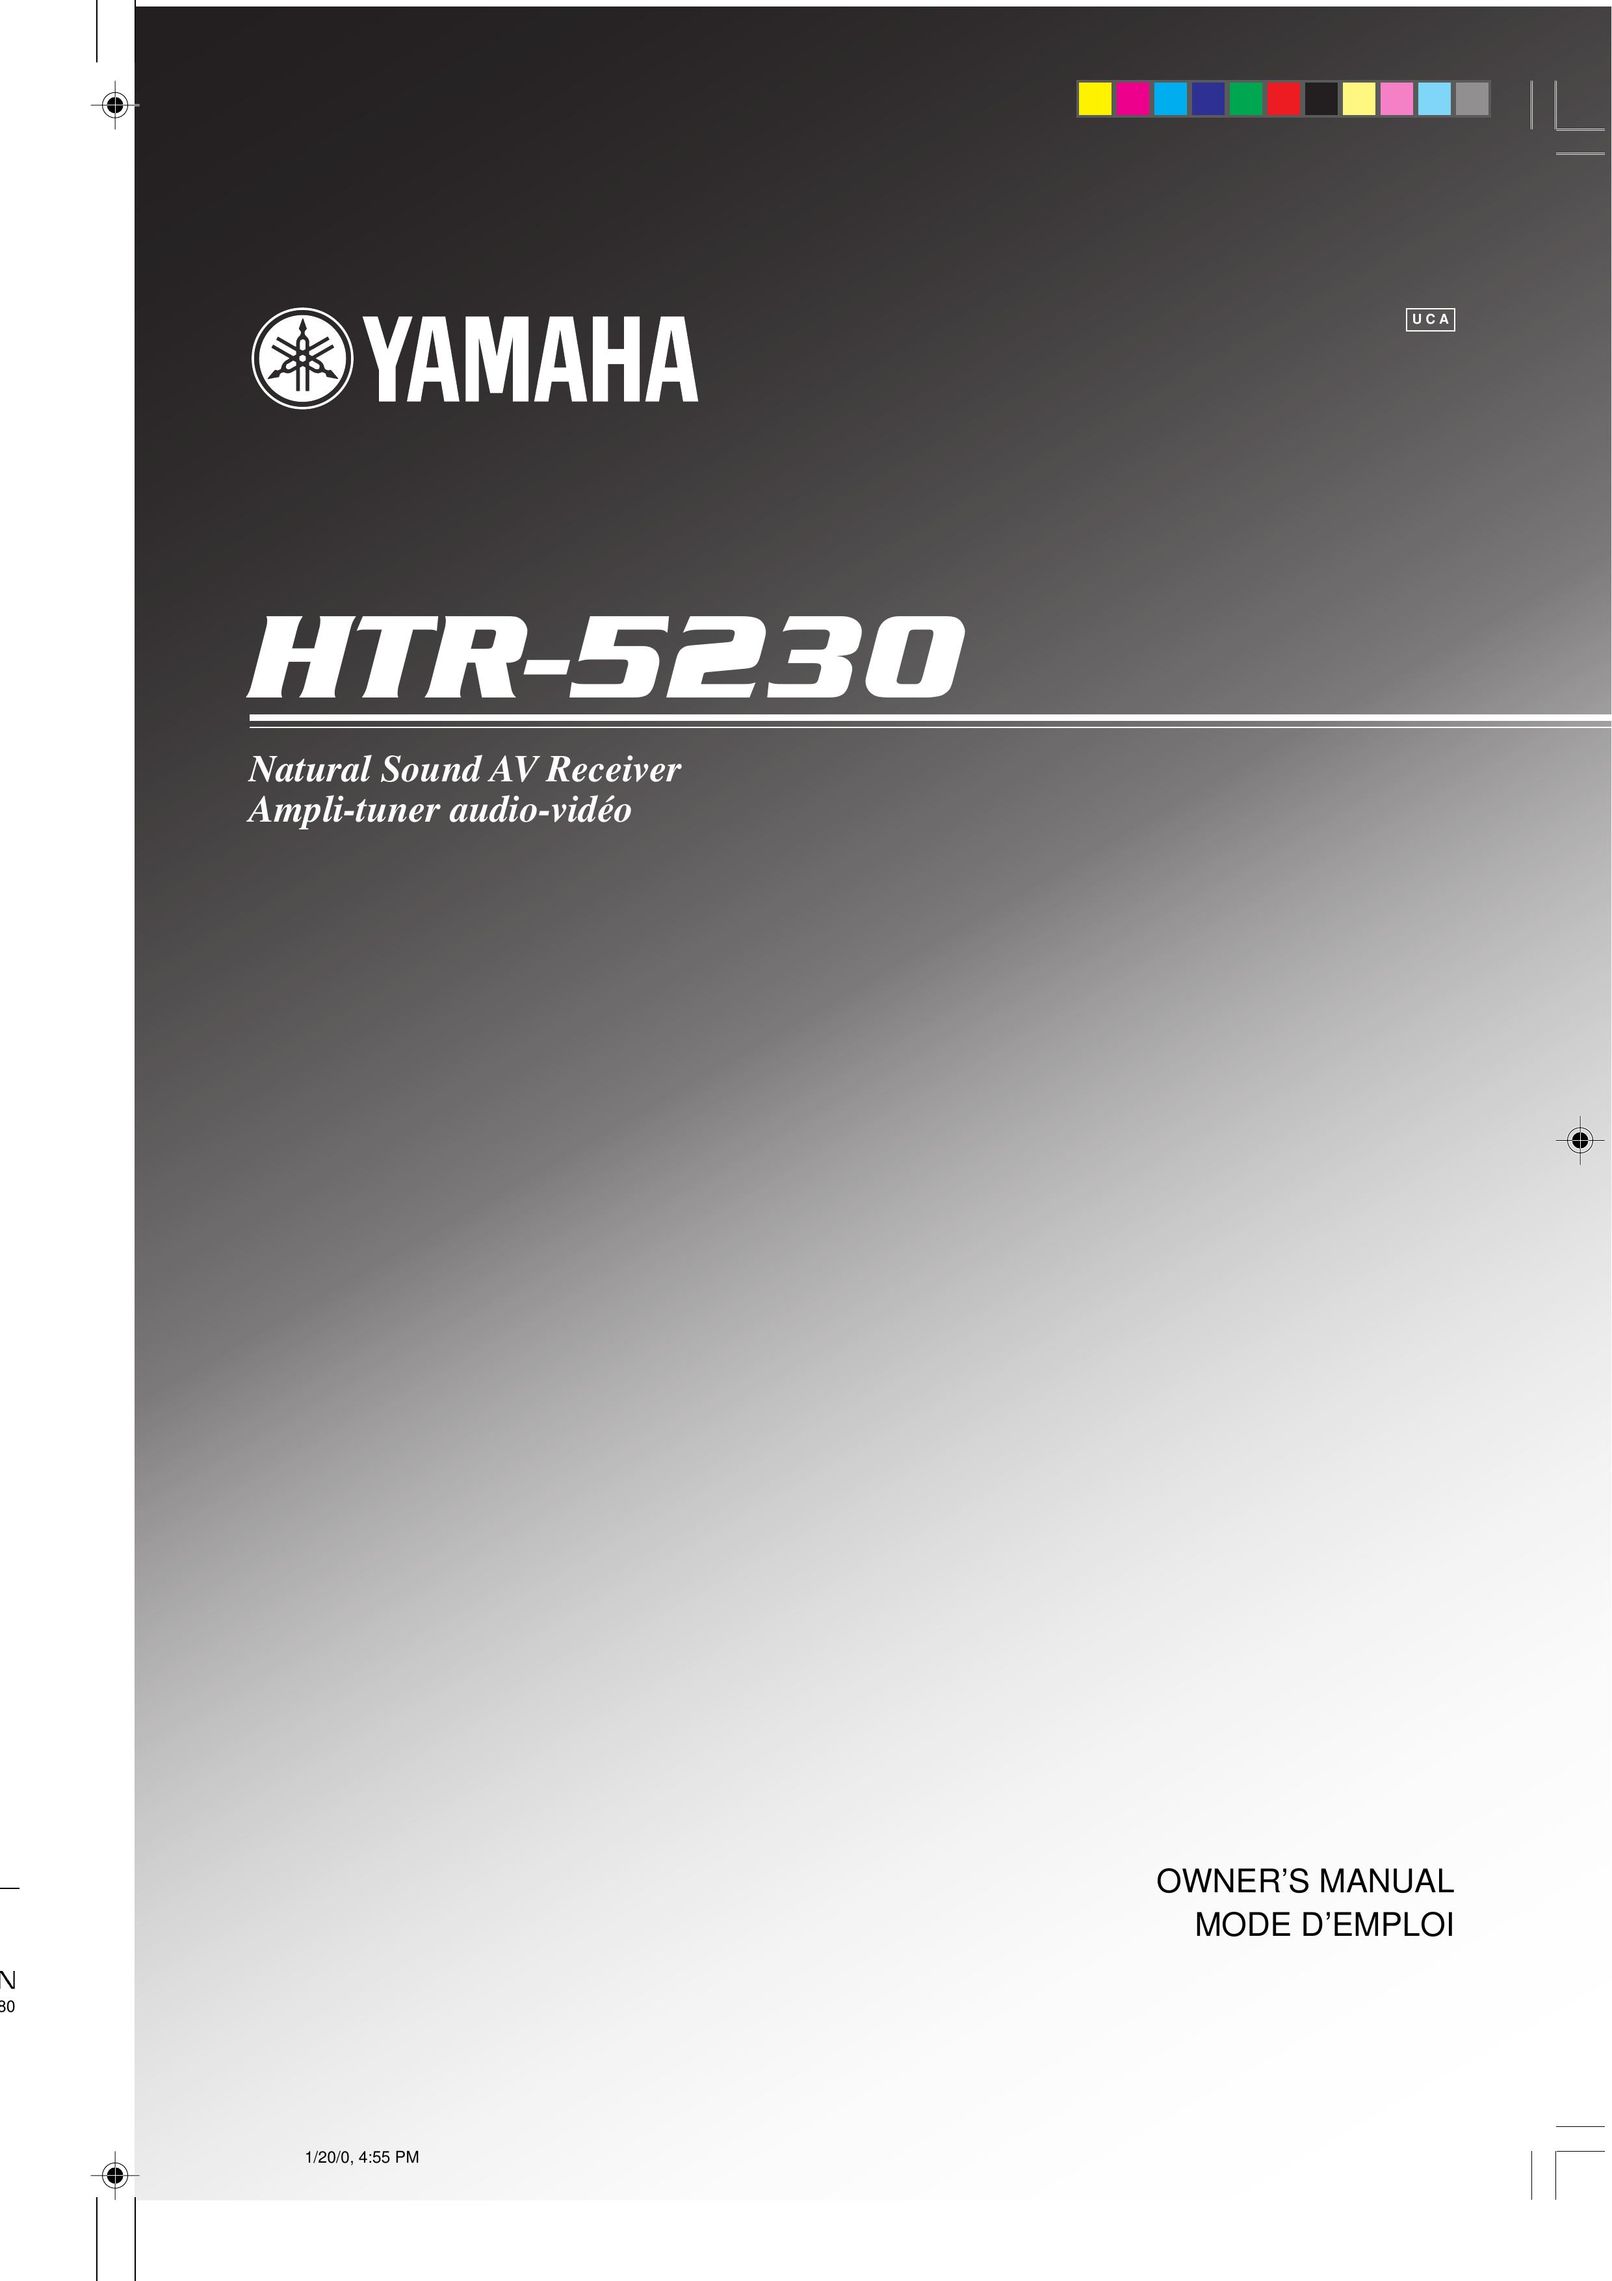 Yamaha HTR-5230 Stereo System User Manual